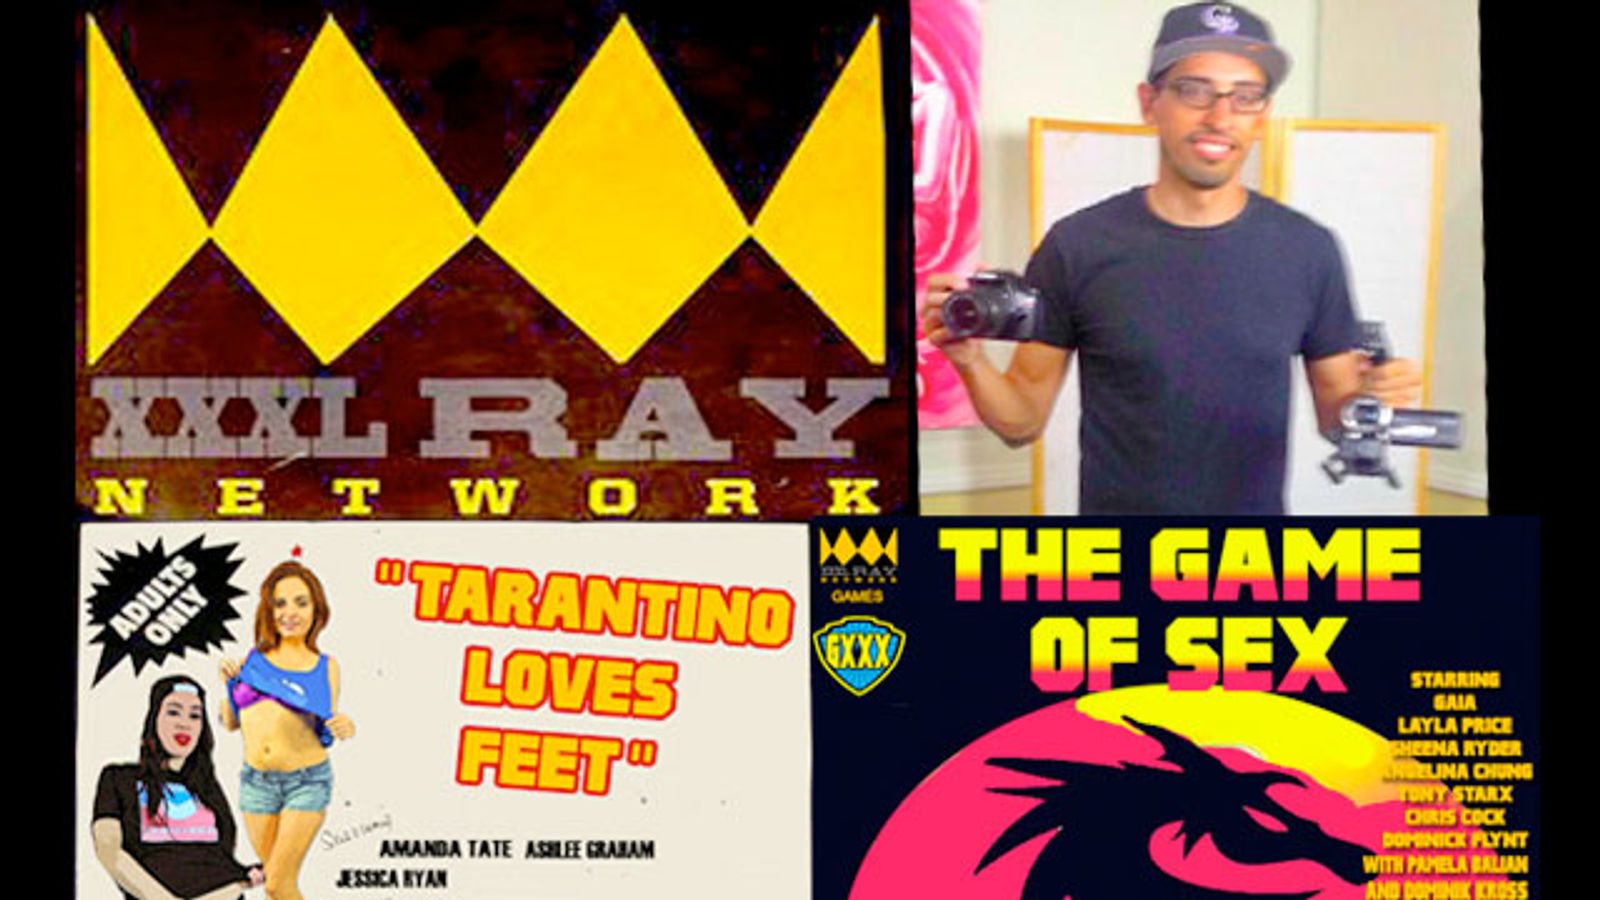 Tarantino XXX Creates the XXXL Ray Network